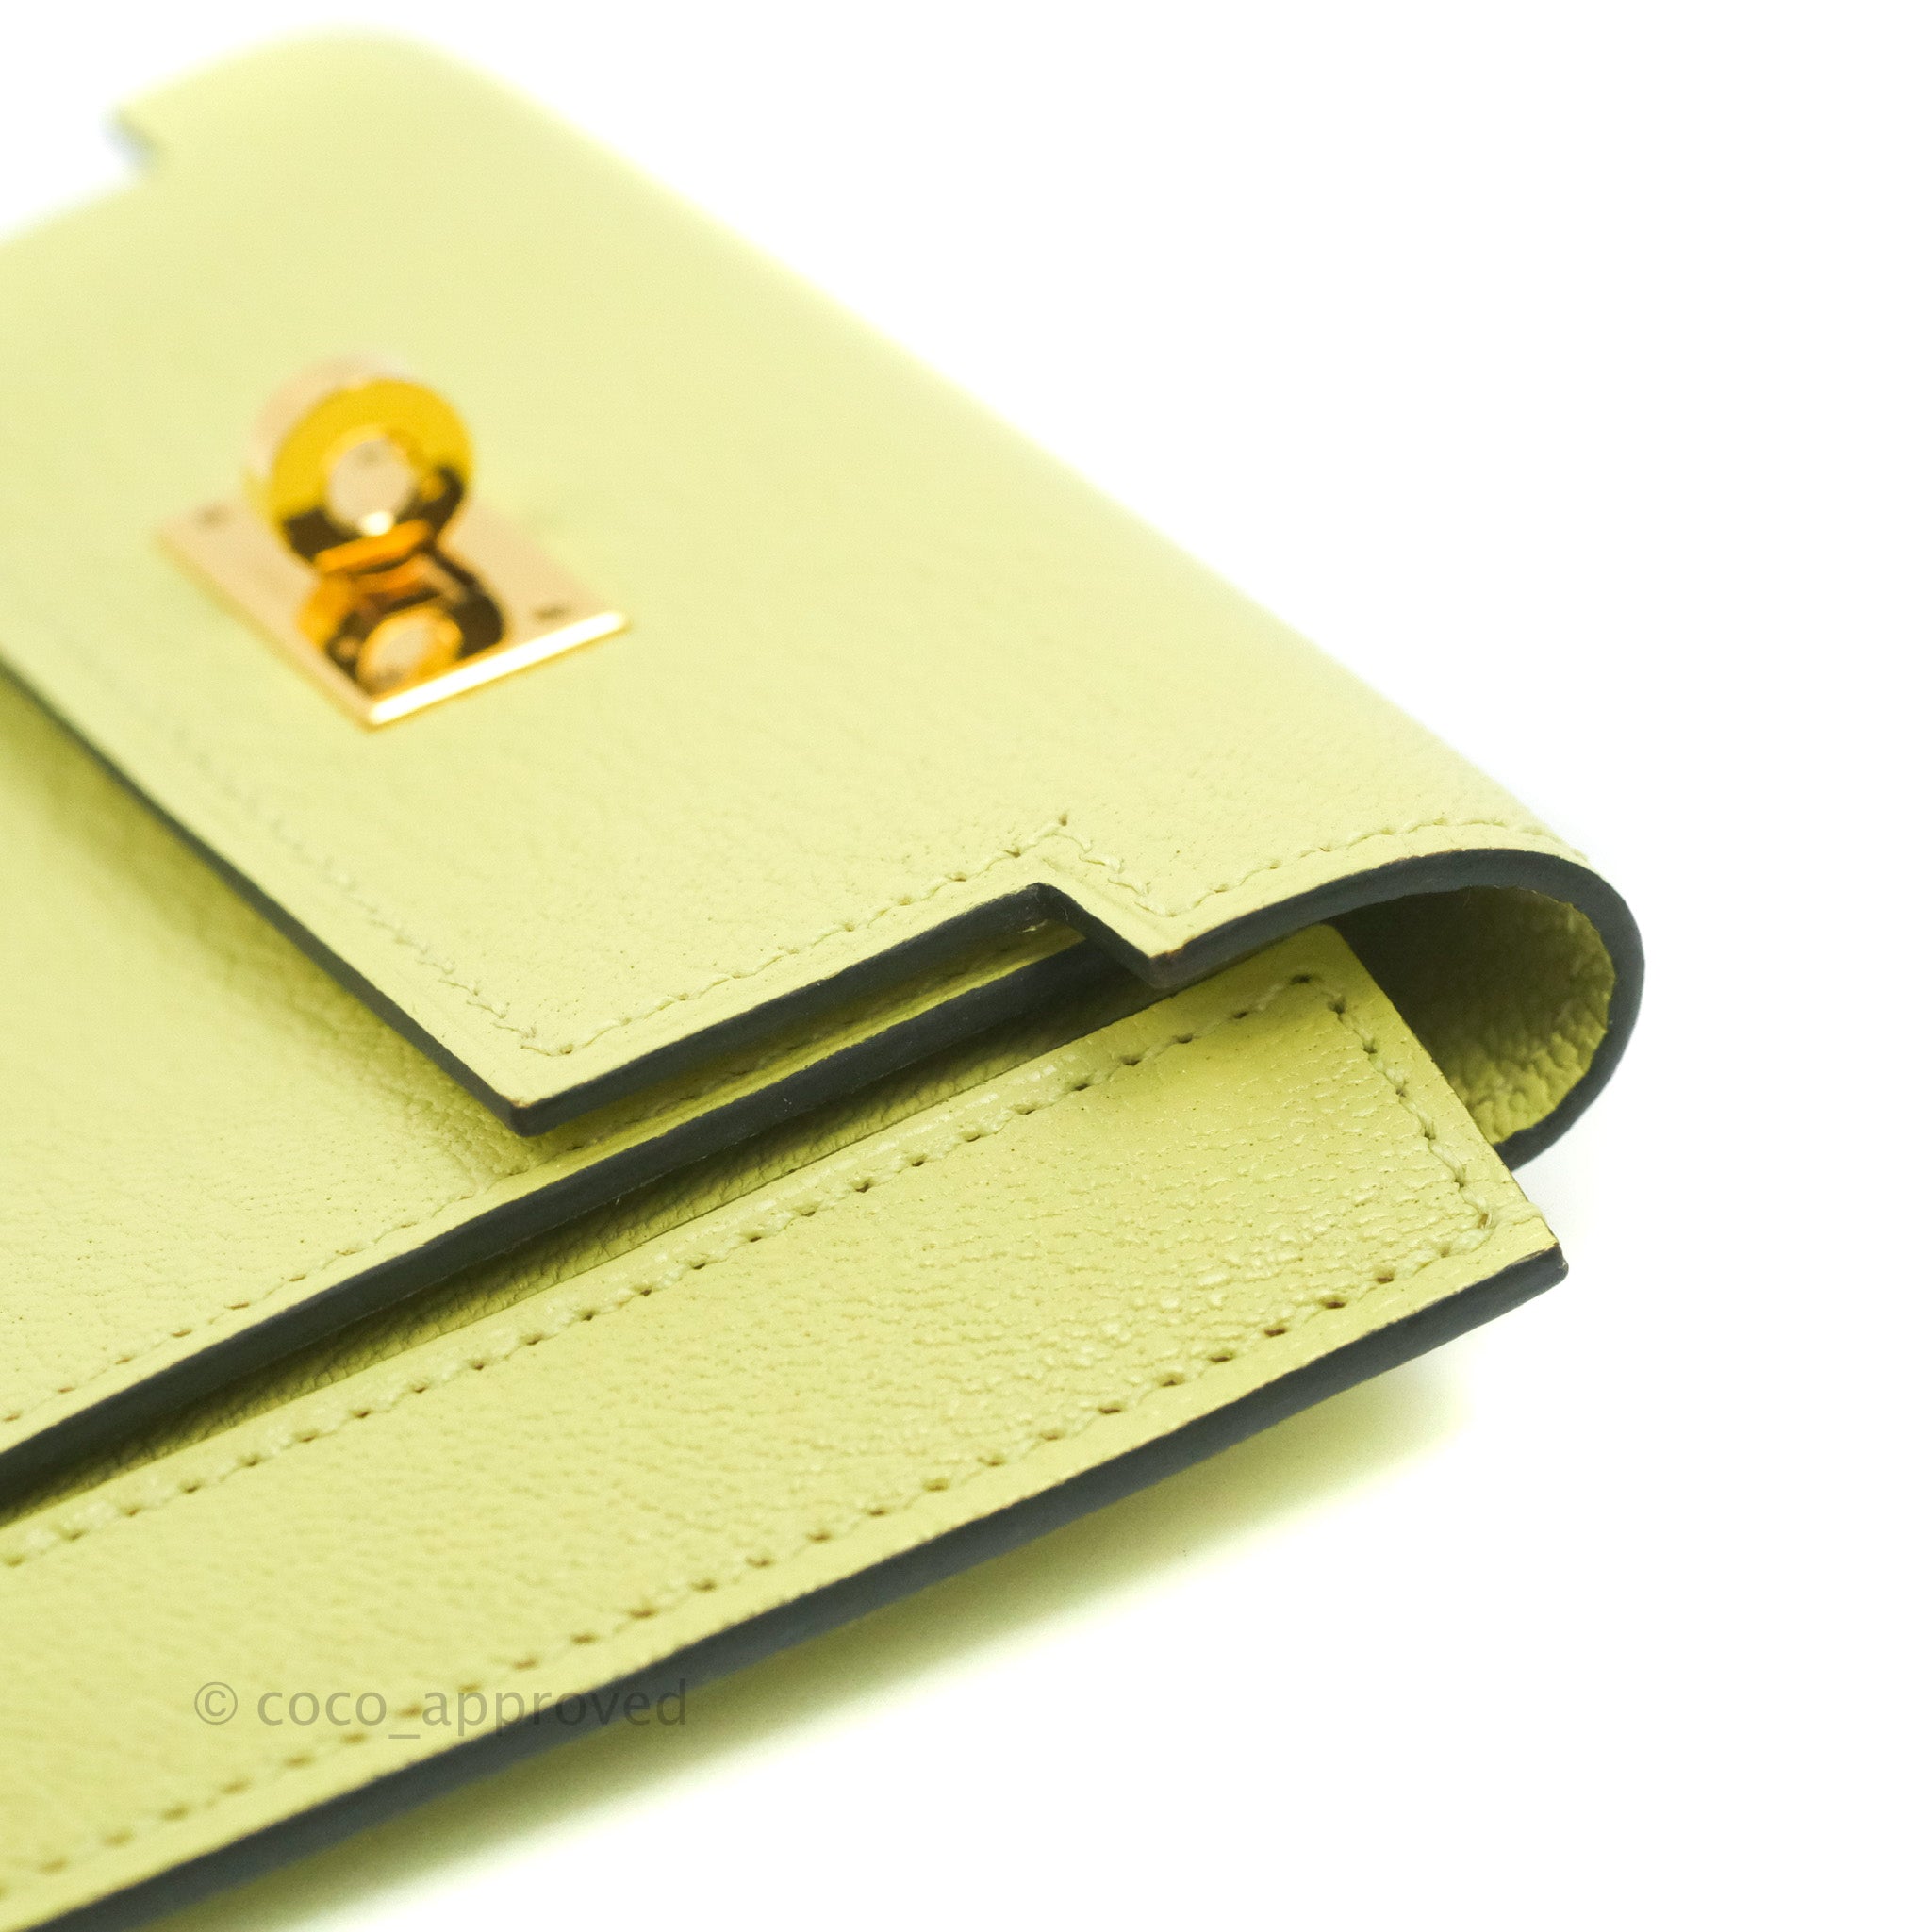 Hermes Kelly Pocket Compact Wallet